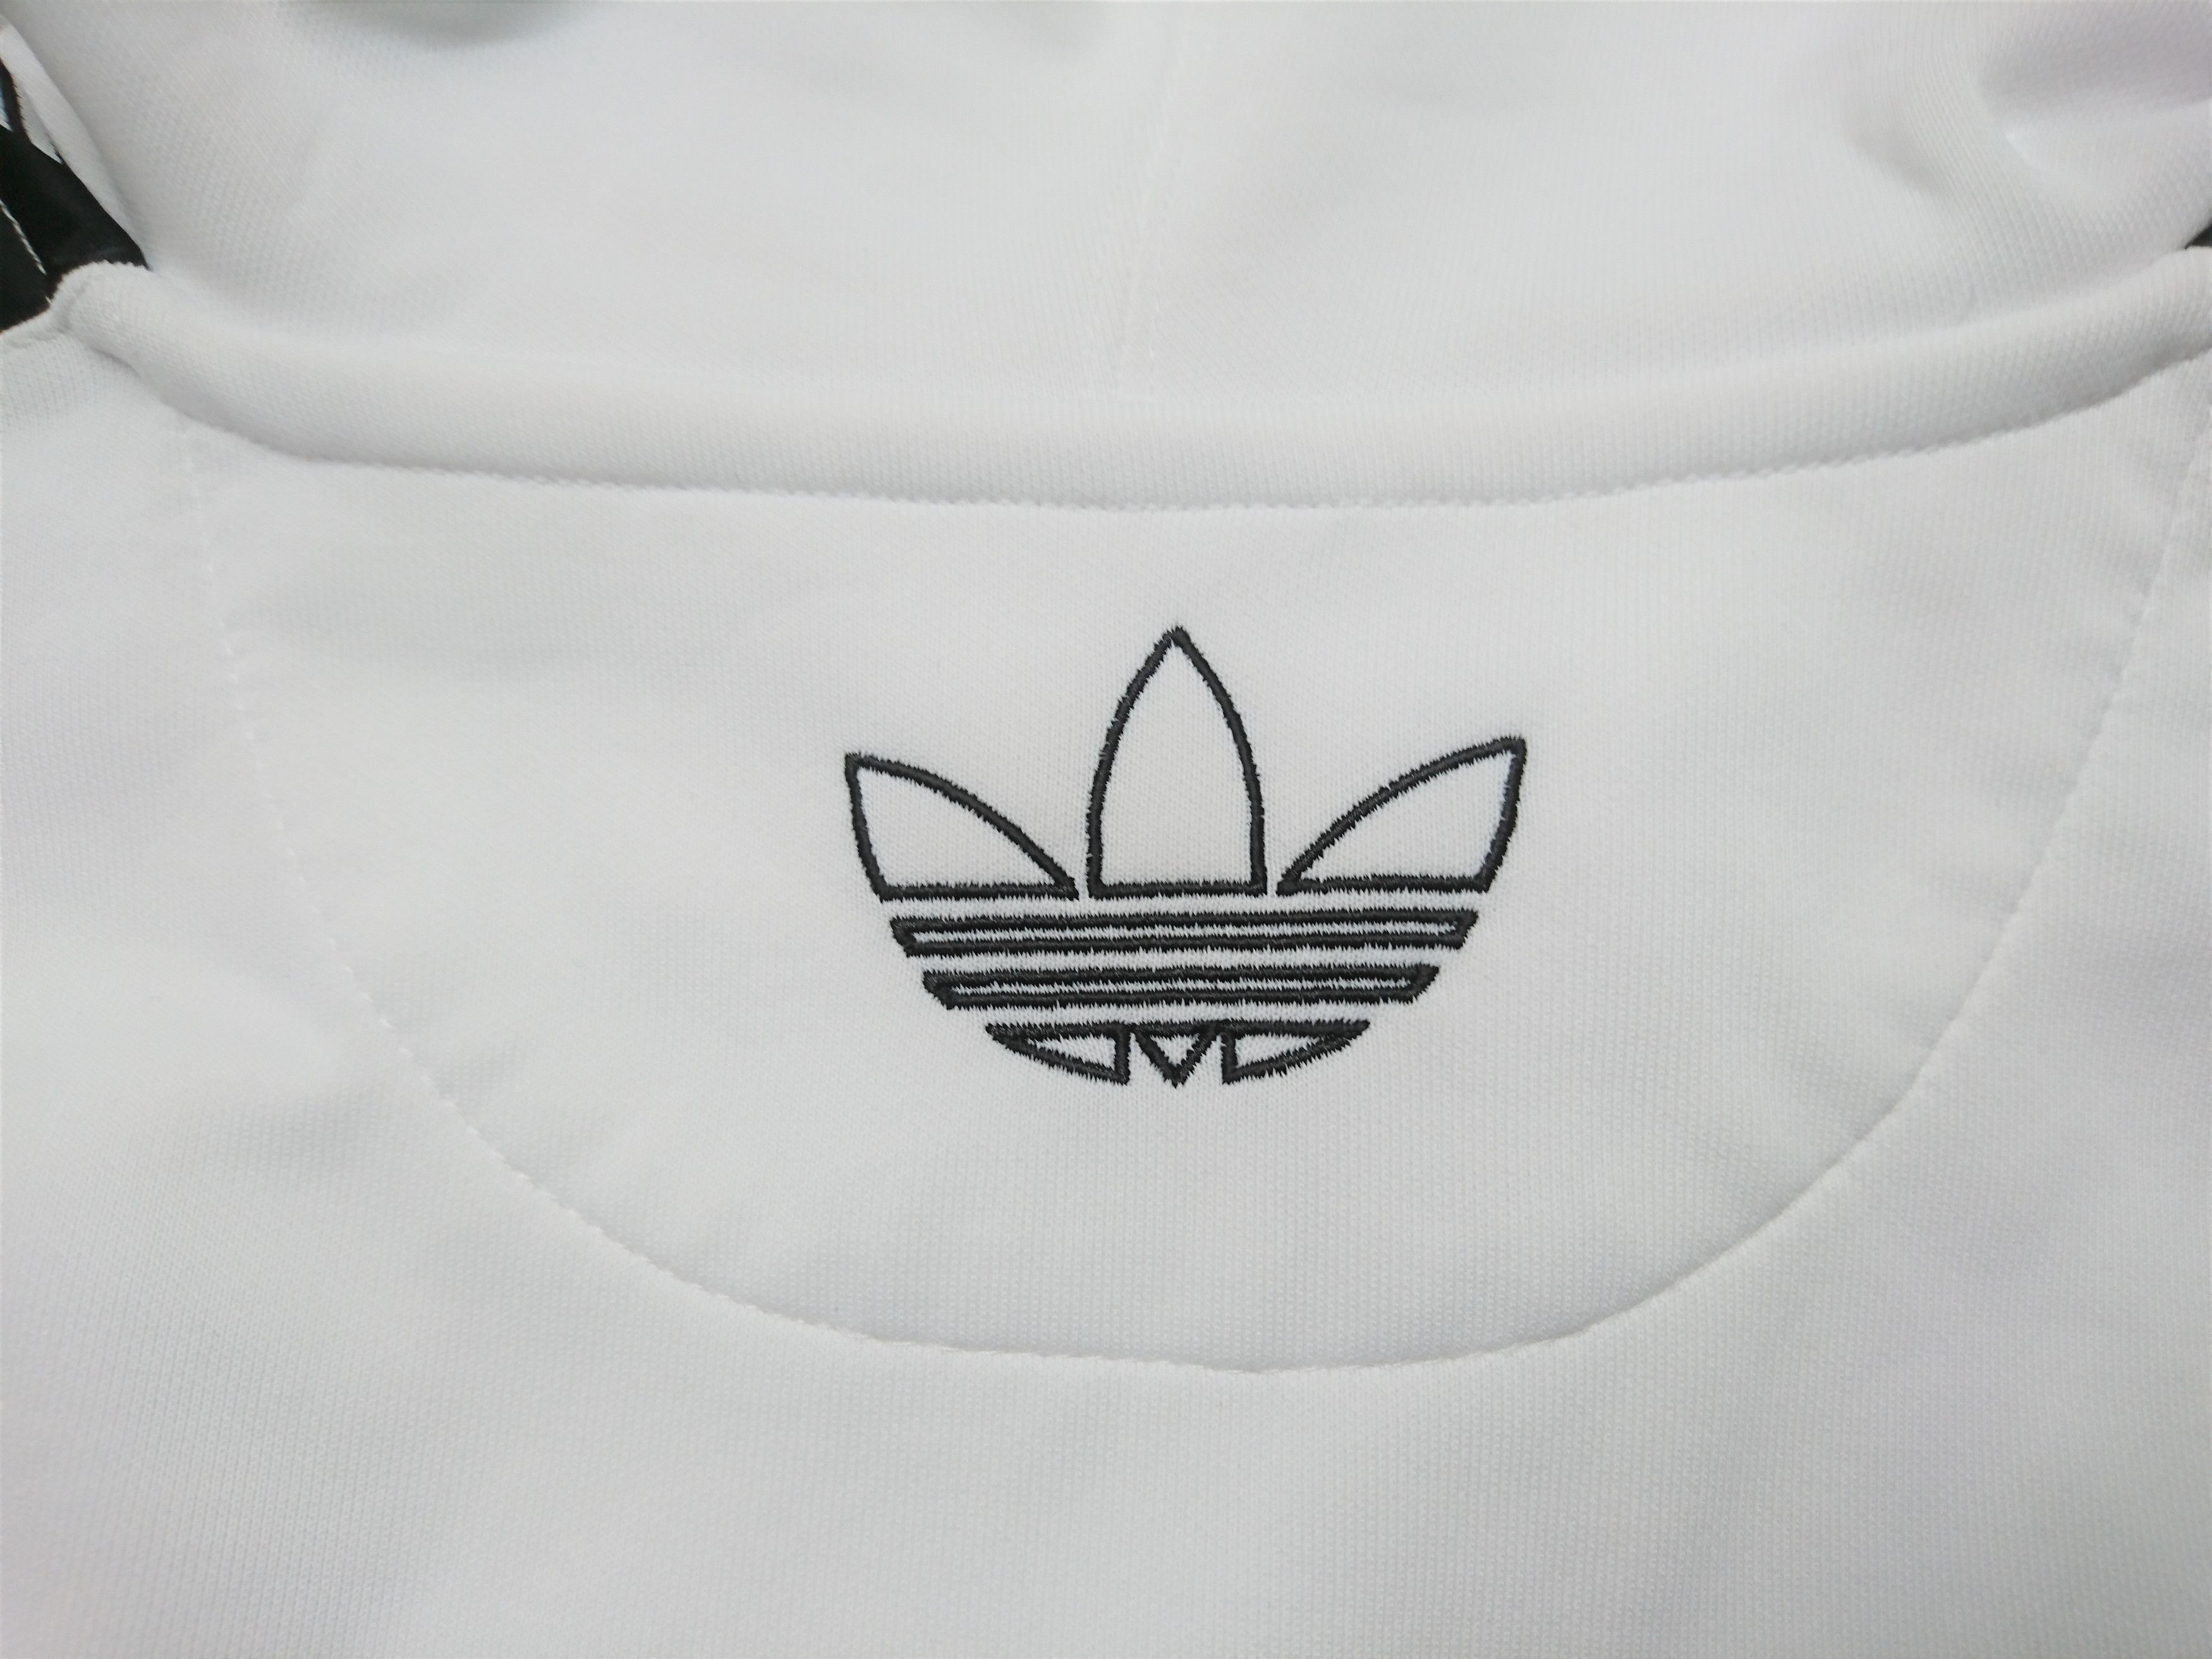 Adidas Adidas Originals TNT Tape pullover hoodie Size US M / EU 48-50 / 2 - 11 Preview